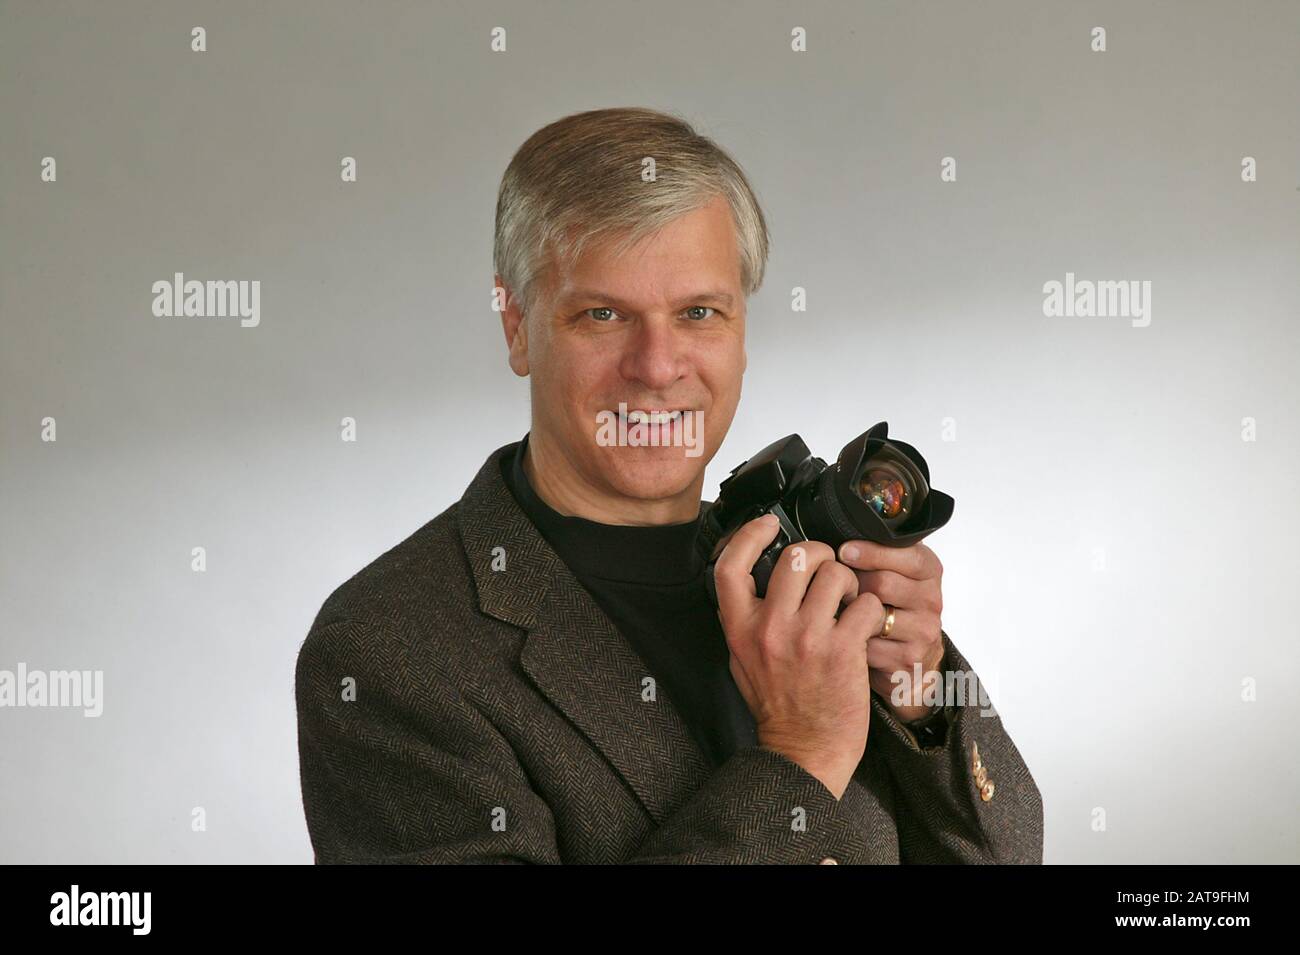 Photographer with smile holding SLR camera. Stock Photo